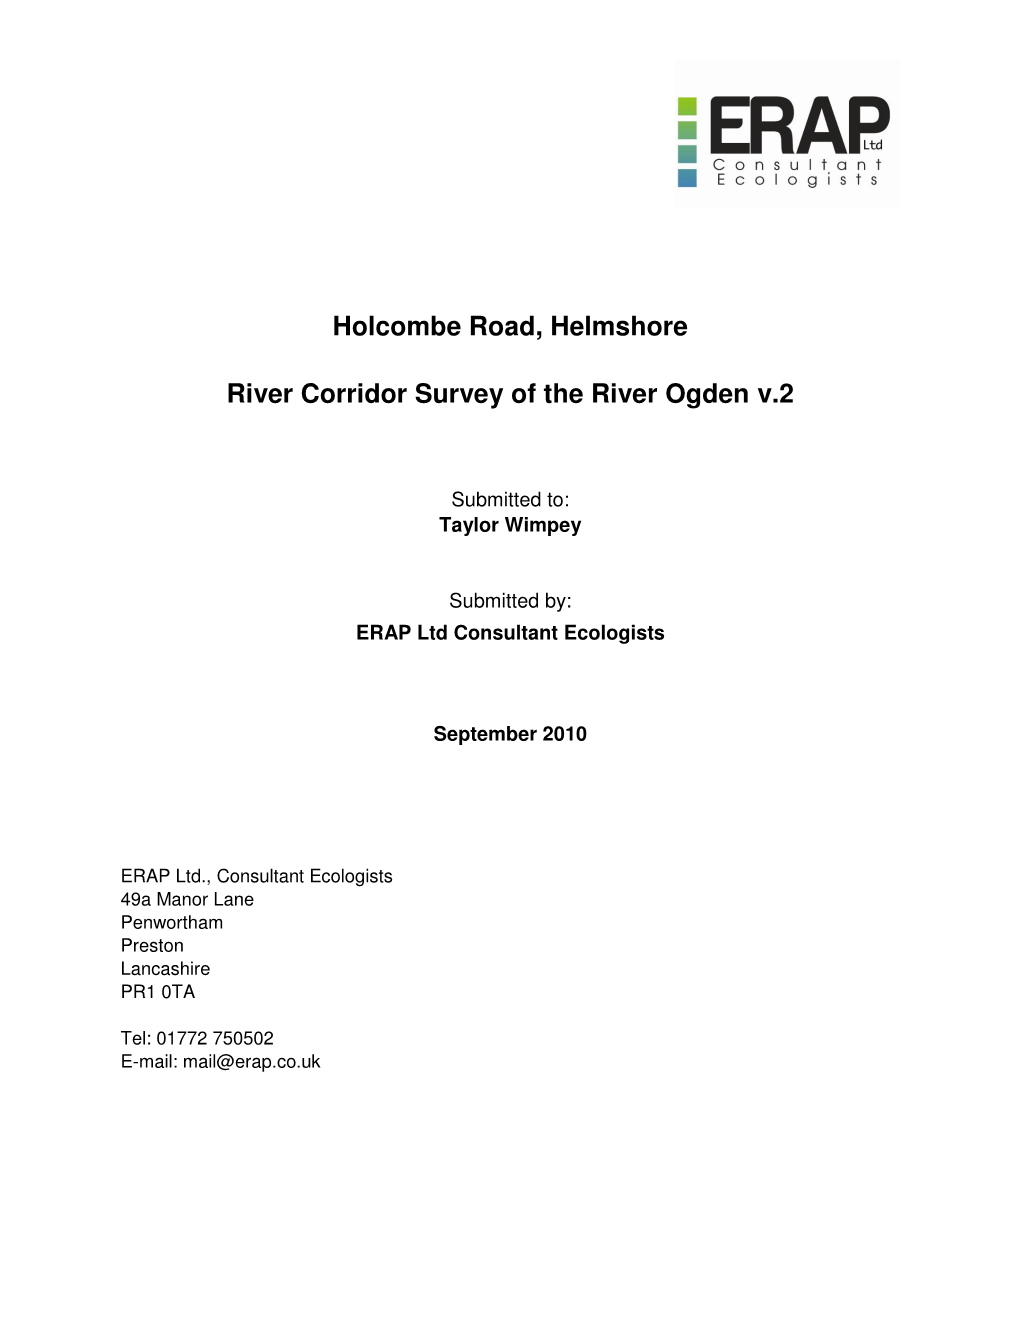 Holcombe Road, Helmshore River Corridor Survey of the River Ogden